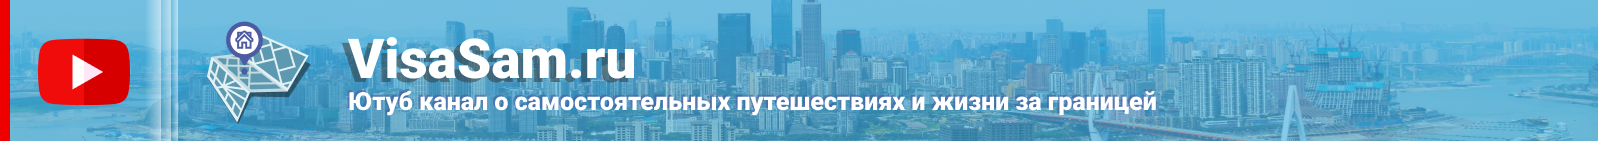 Dvlottery state gov официальный сайт лотереи green card на русском языке 2022